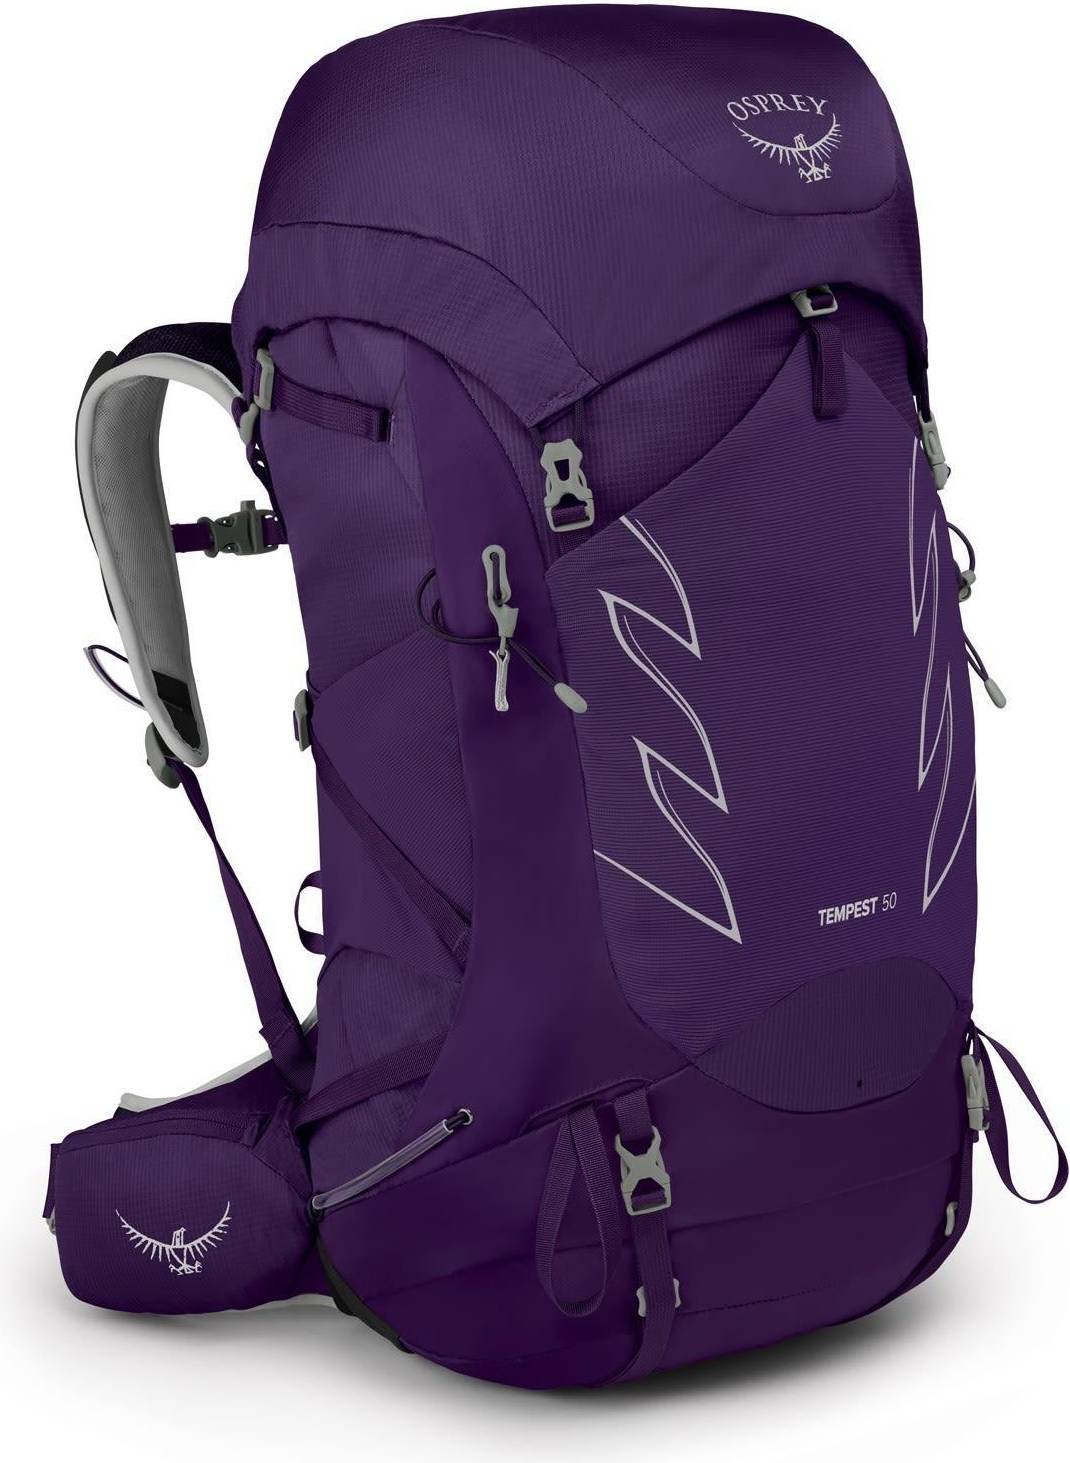  Bild på Osprey Tempest 50 M/L - Violac Purple ryggsäck